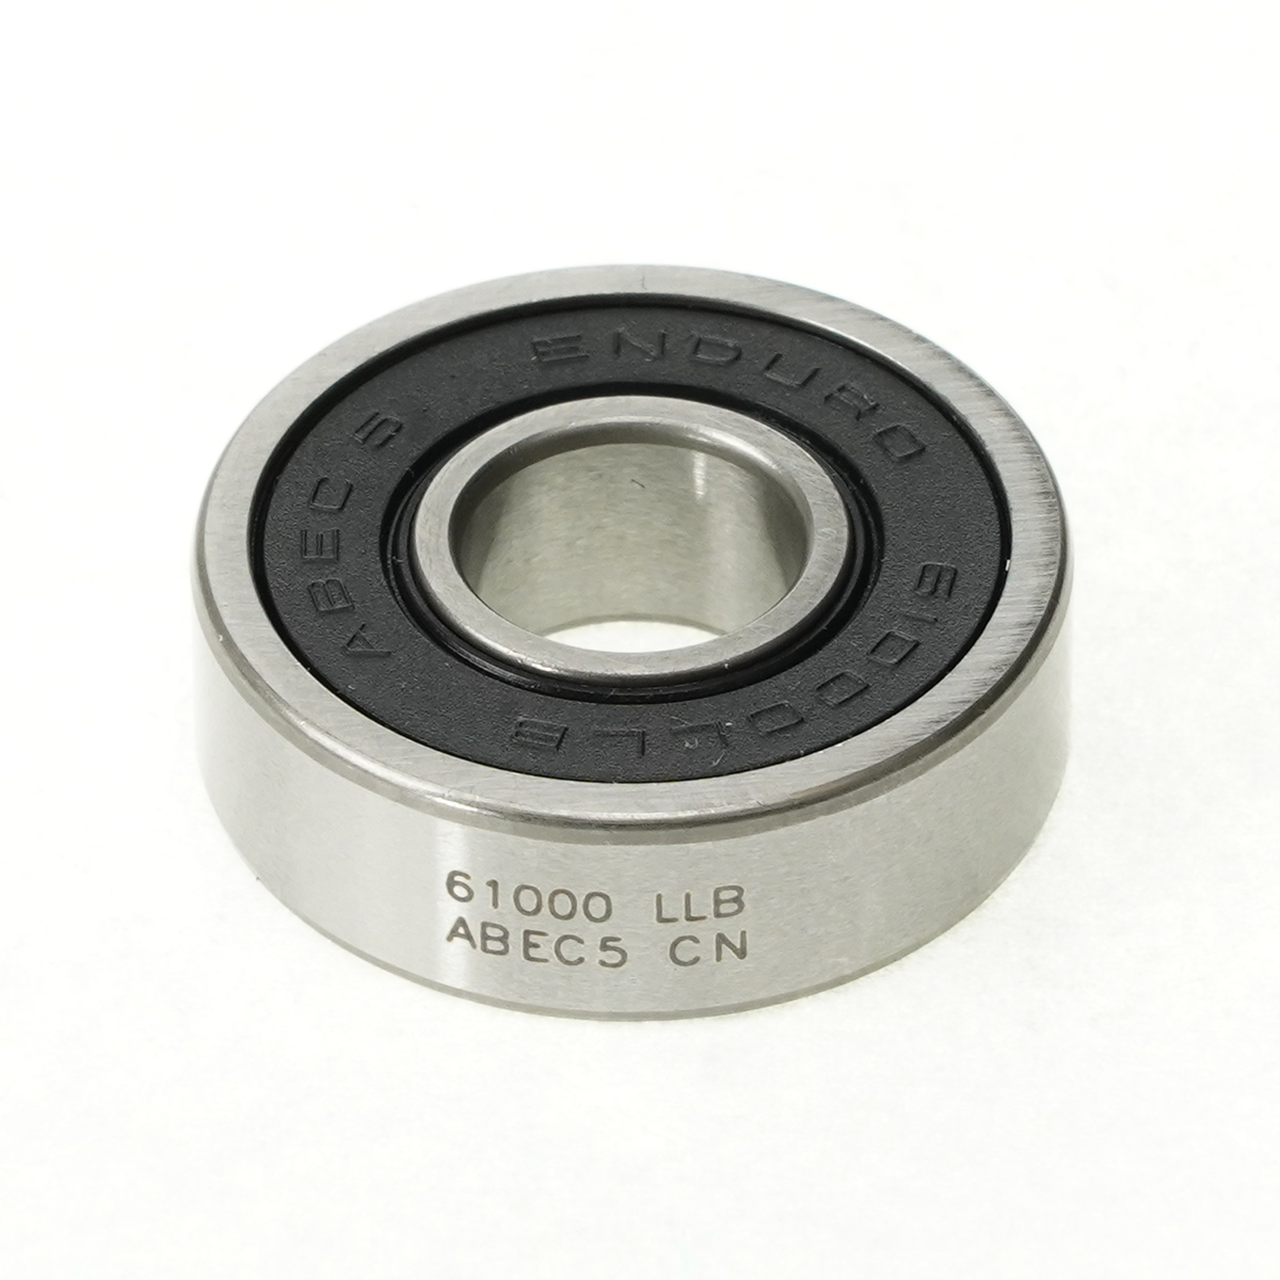 Enduro 61000 LLB - ABEC-5 Radial Bearing (C3 Clearance) - 10mm x 26mm x 8mm